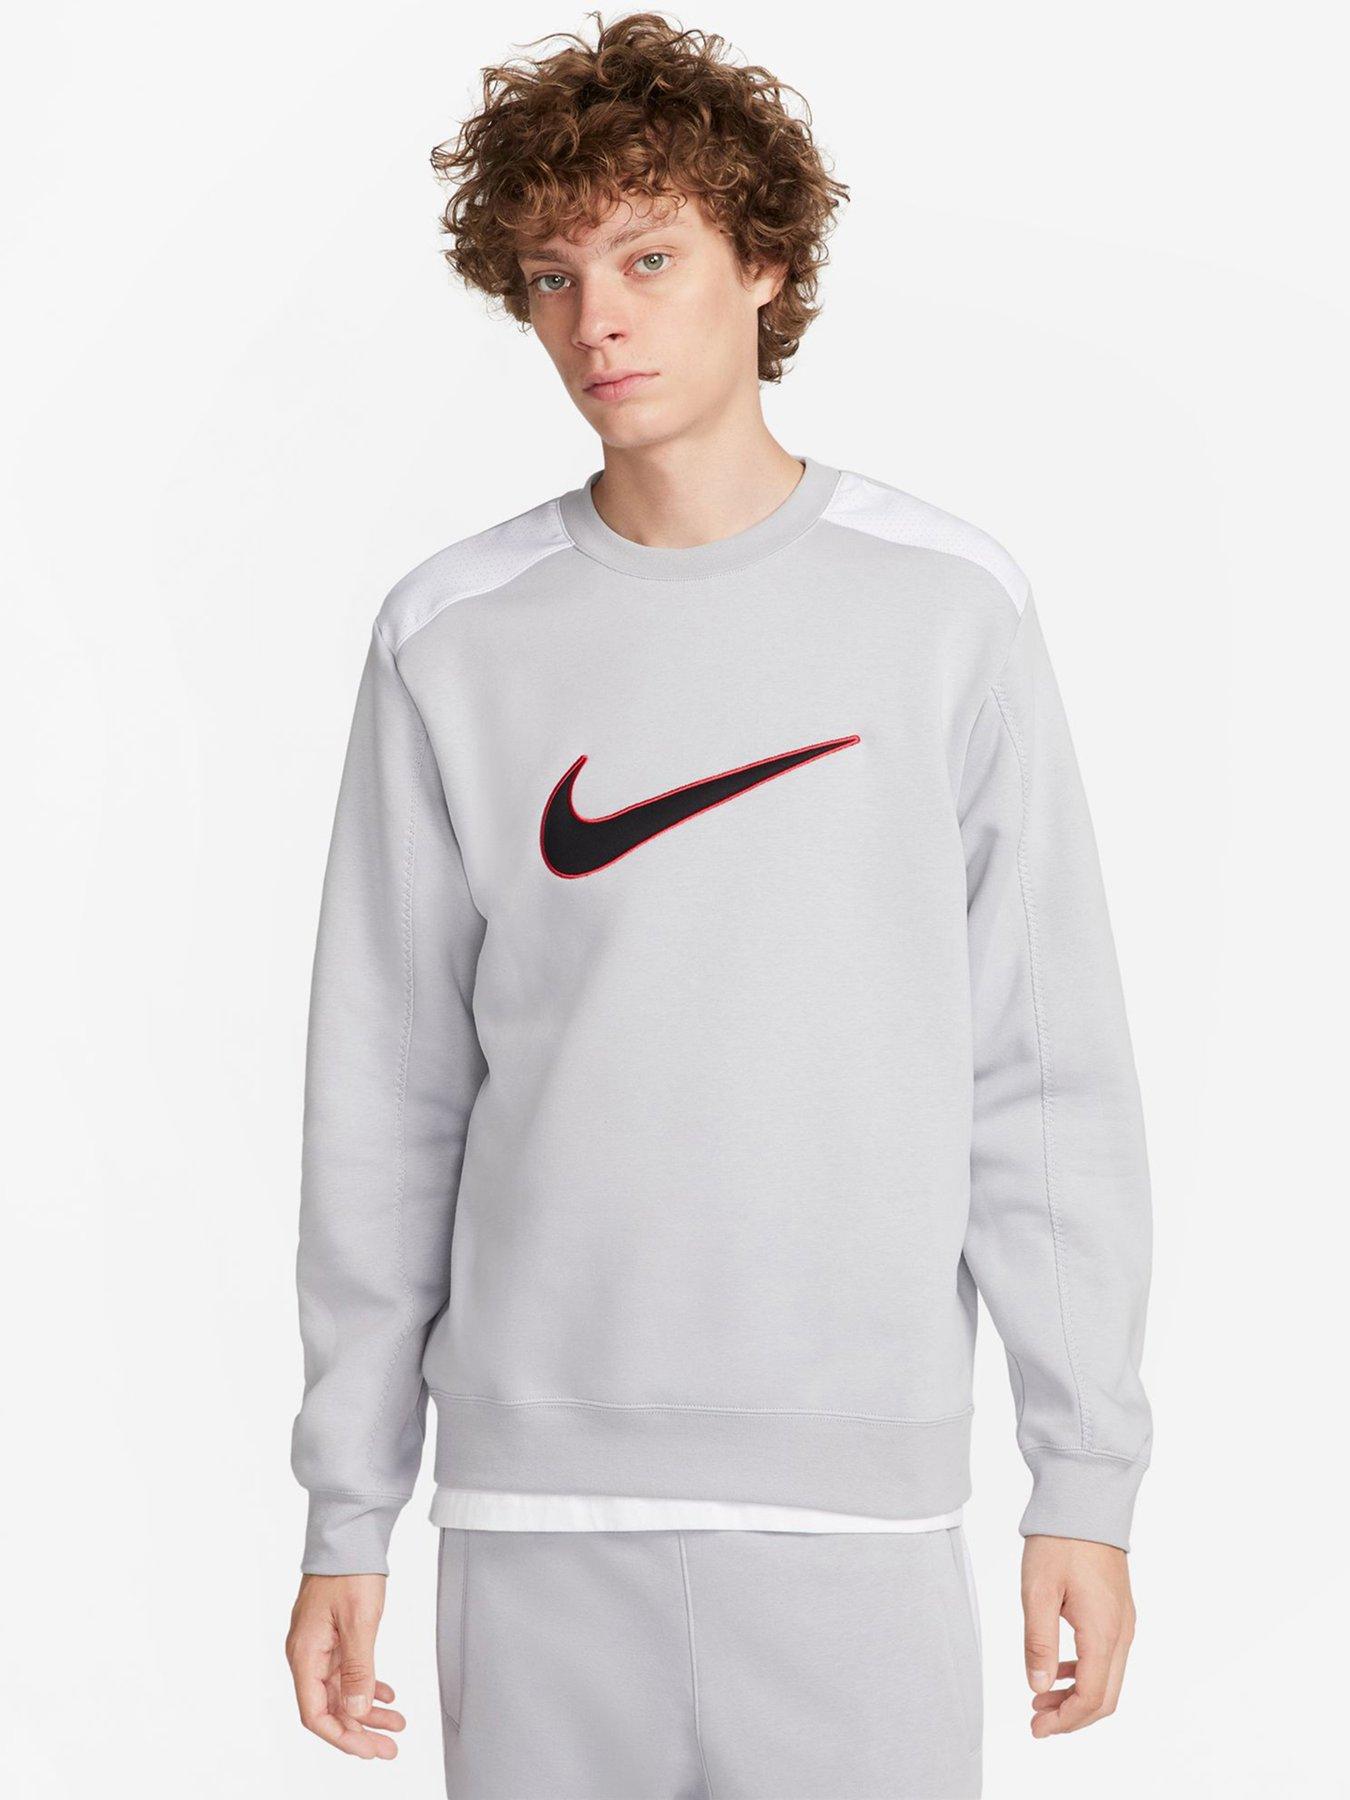 Men's Nike Grey Hoodies & Sweatshirts | Very.co.uk